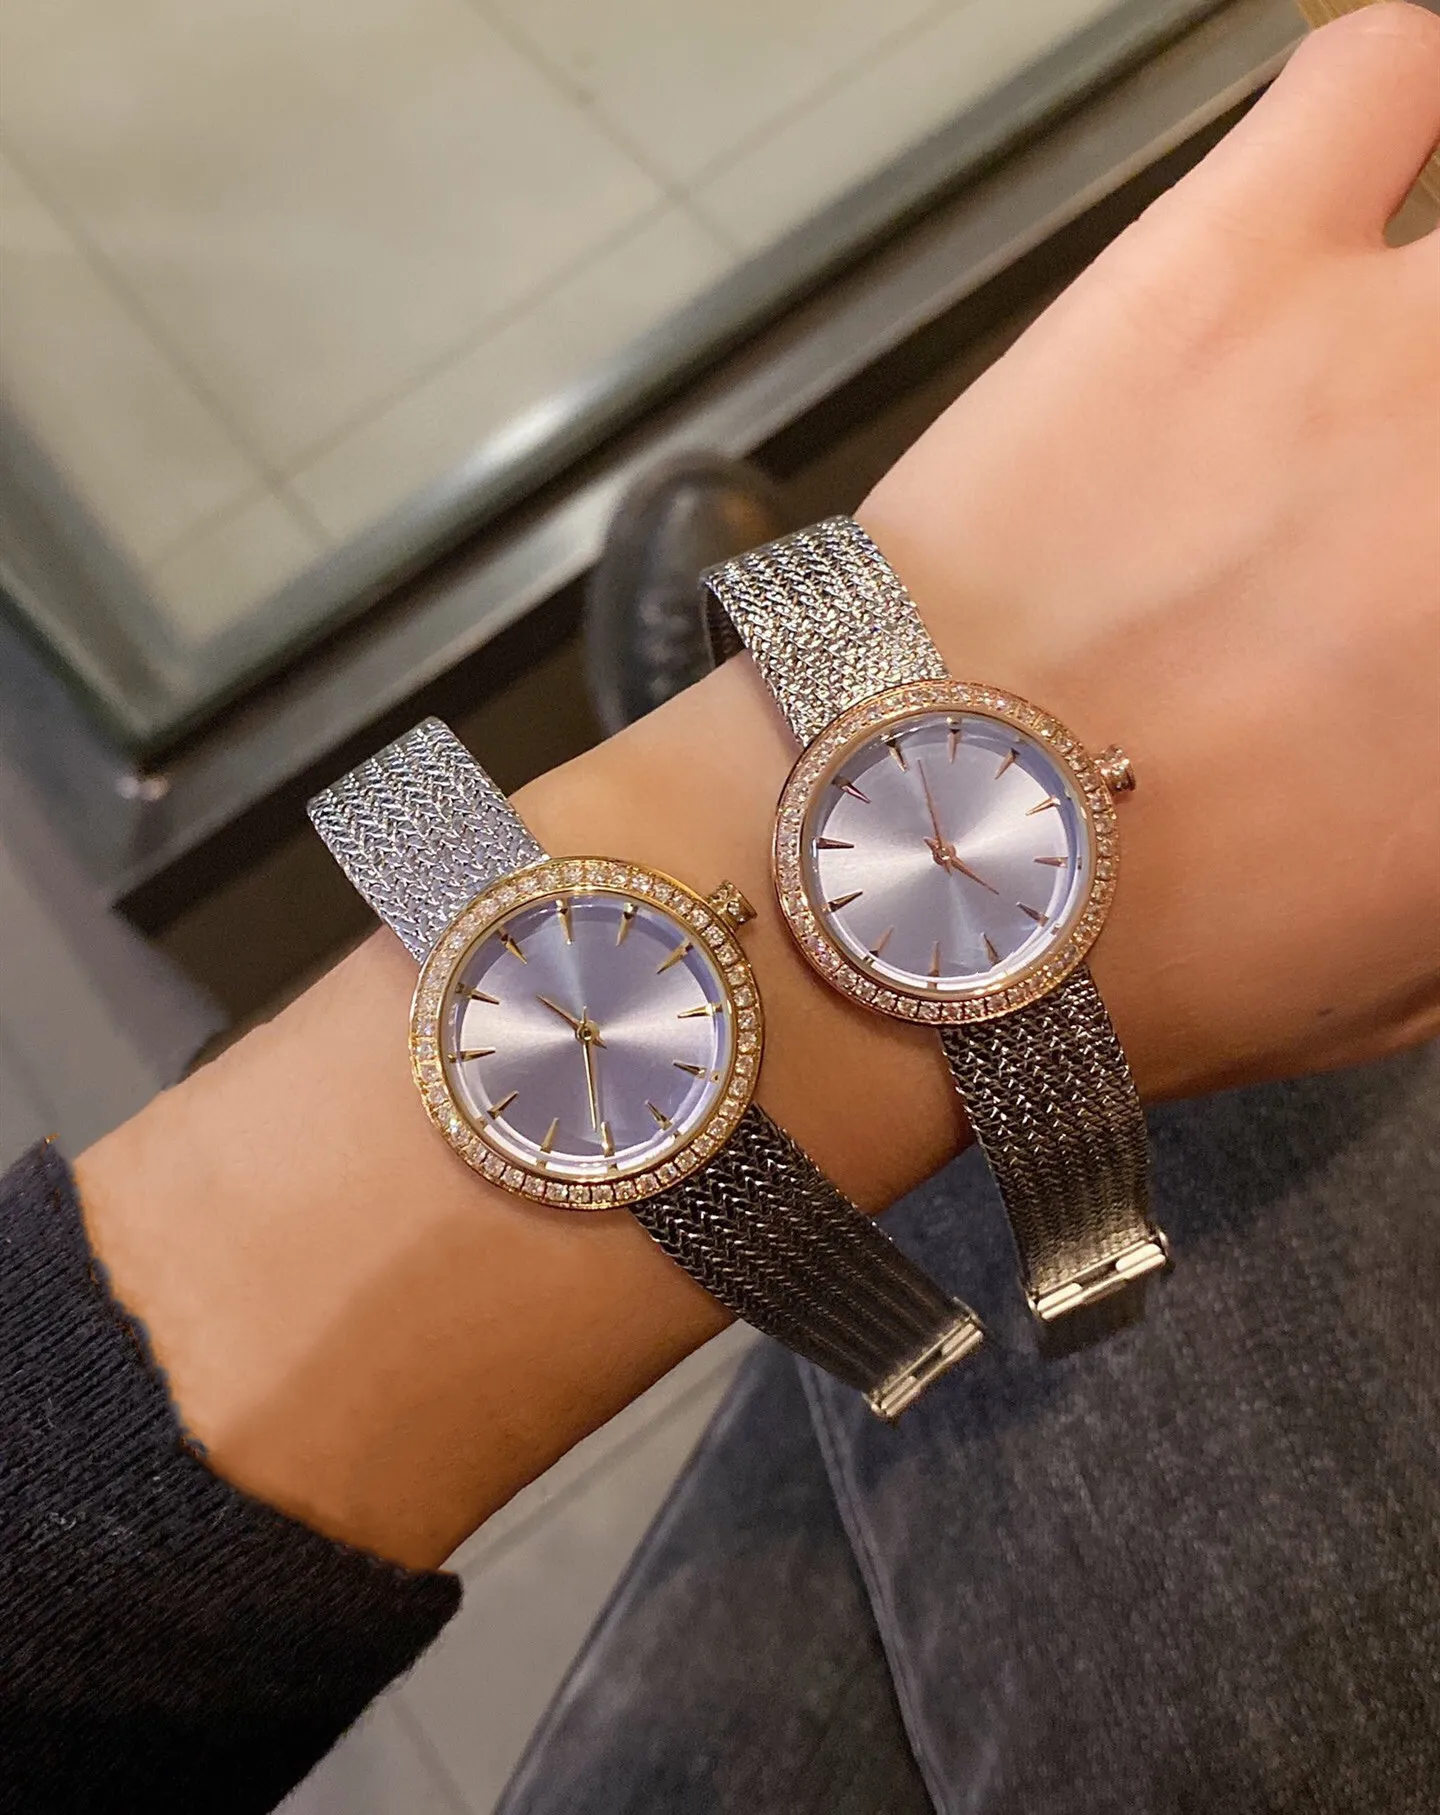 28mm女性の幾何学的なメッシュベルト時計カジュアルラインストーンクォーツ腕時計メスステンレス鋼磁気バックルブレスレット